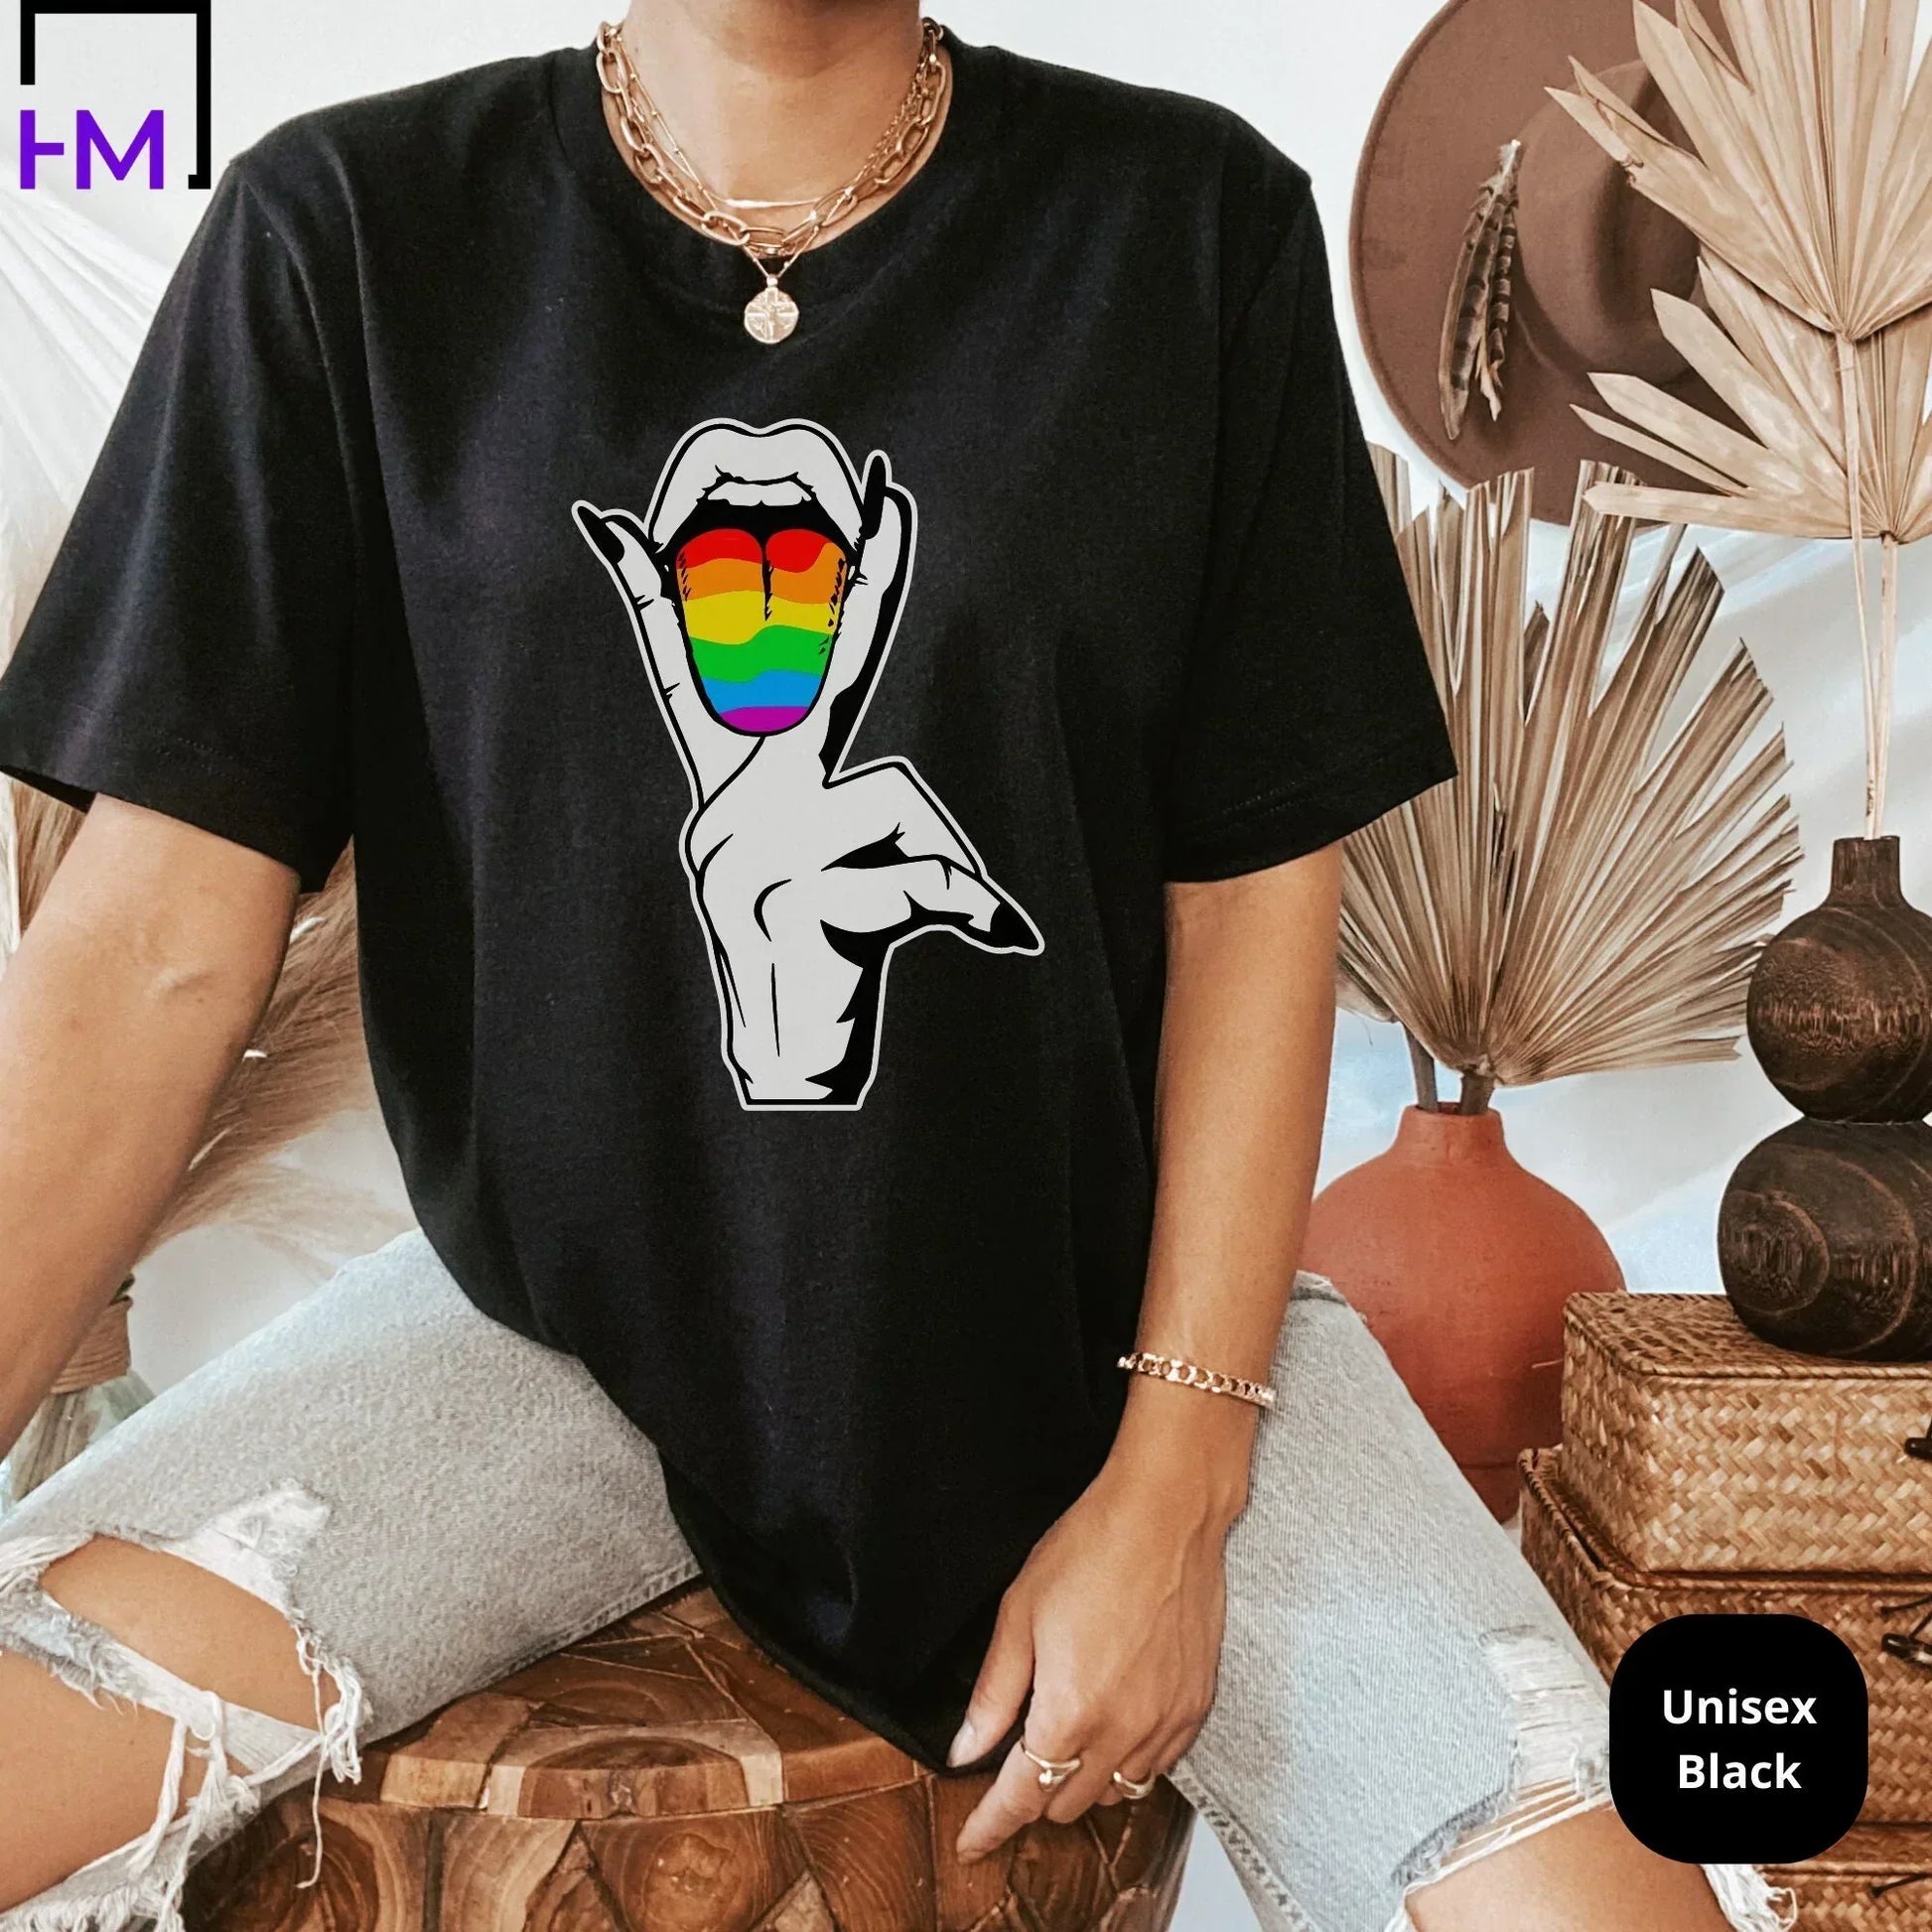 Lesbian Shirt, Peace Rainbow, Human Rights Love is Love Shirt, Retro Hippie Shirt, Equality T-Shirt, LGBTQ Support Shirts, LGBTQ Pride Tees HMDesignStudioUS